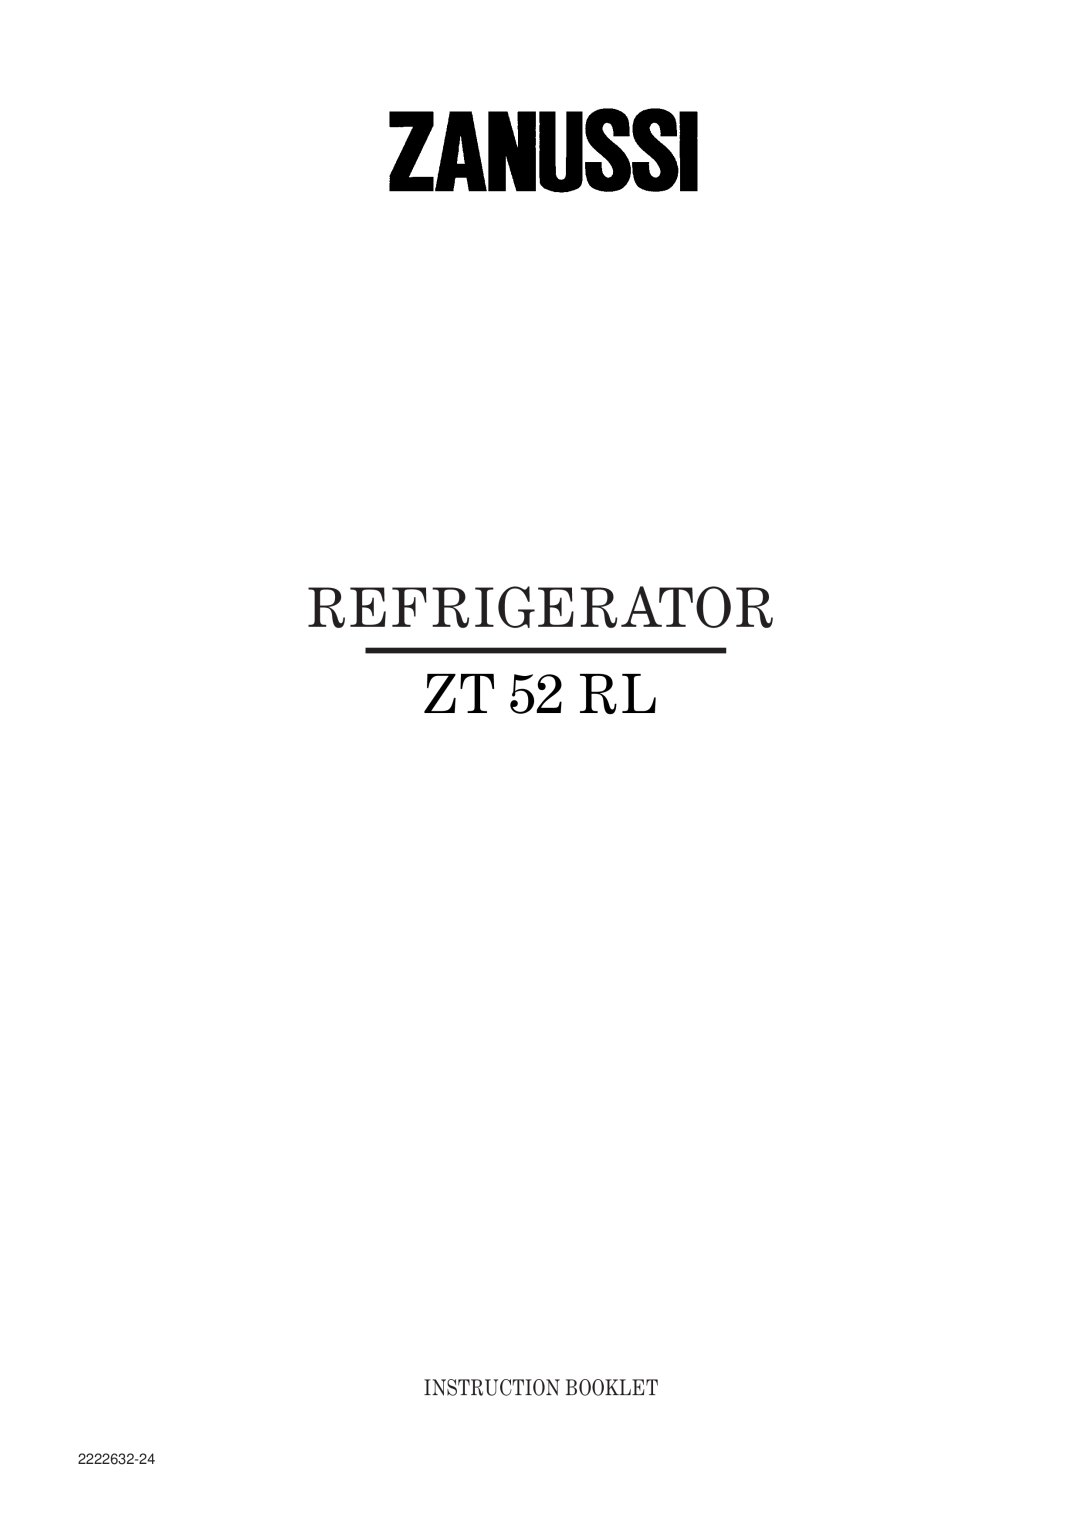 Zanussi ZT 52 RL manual Refrigerator, Instruction Booklet, 2222632-24 